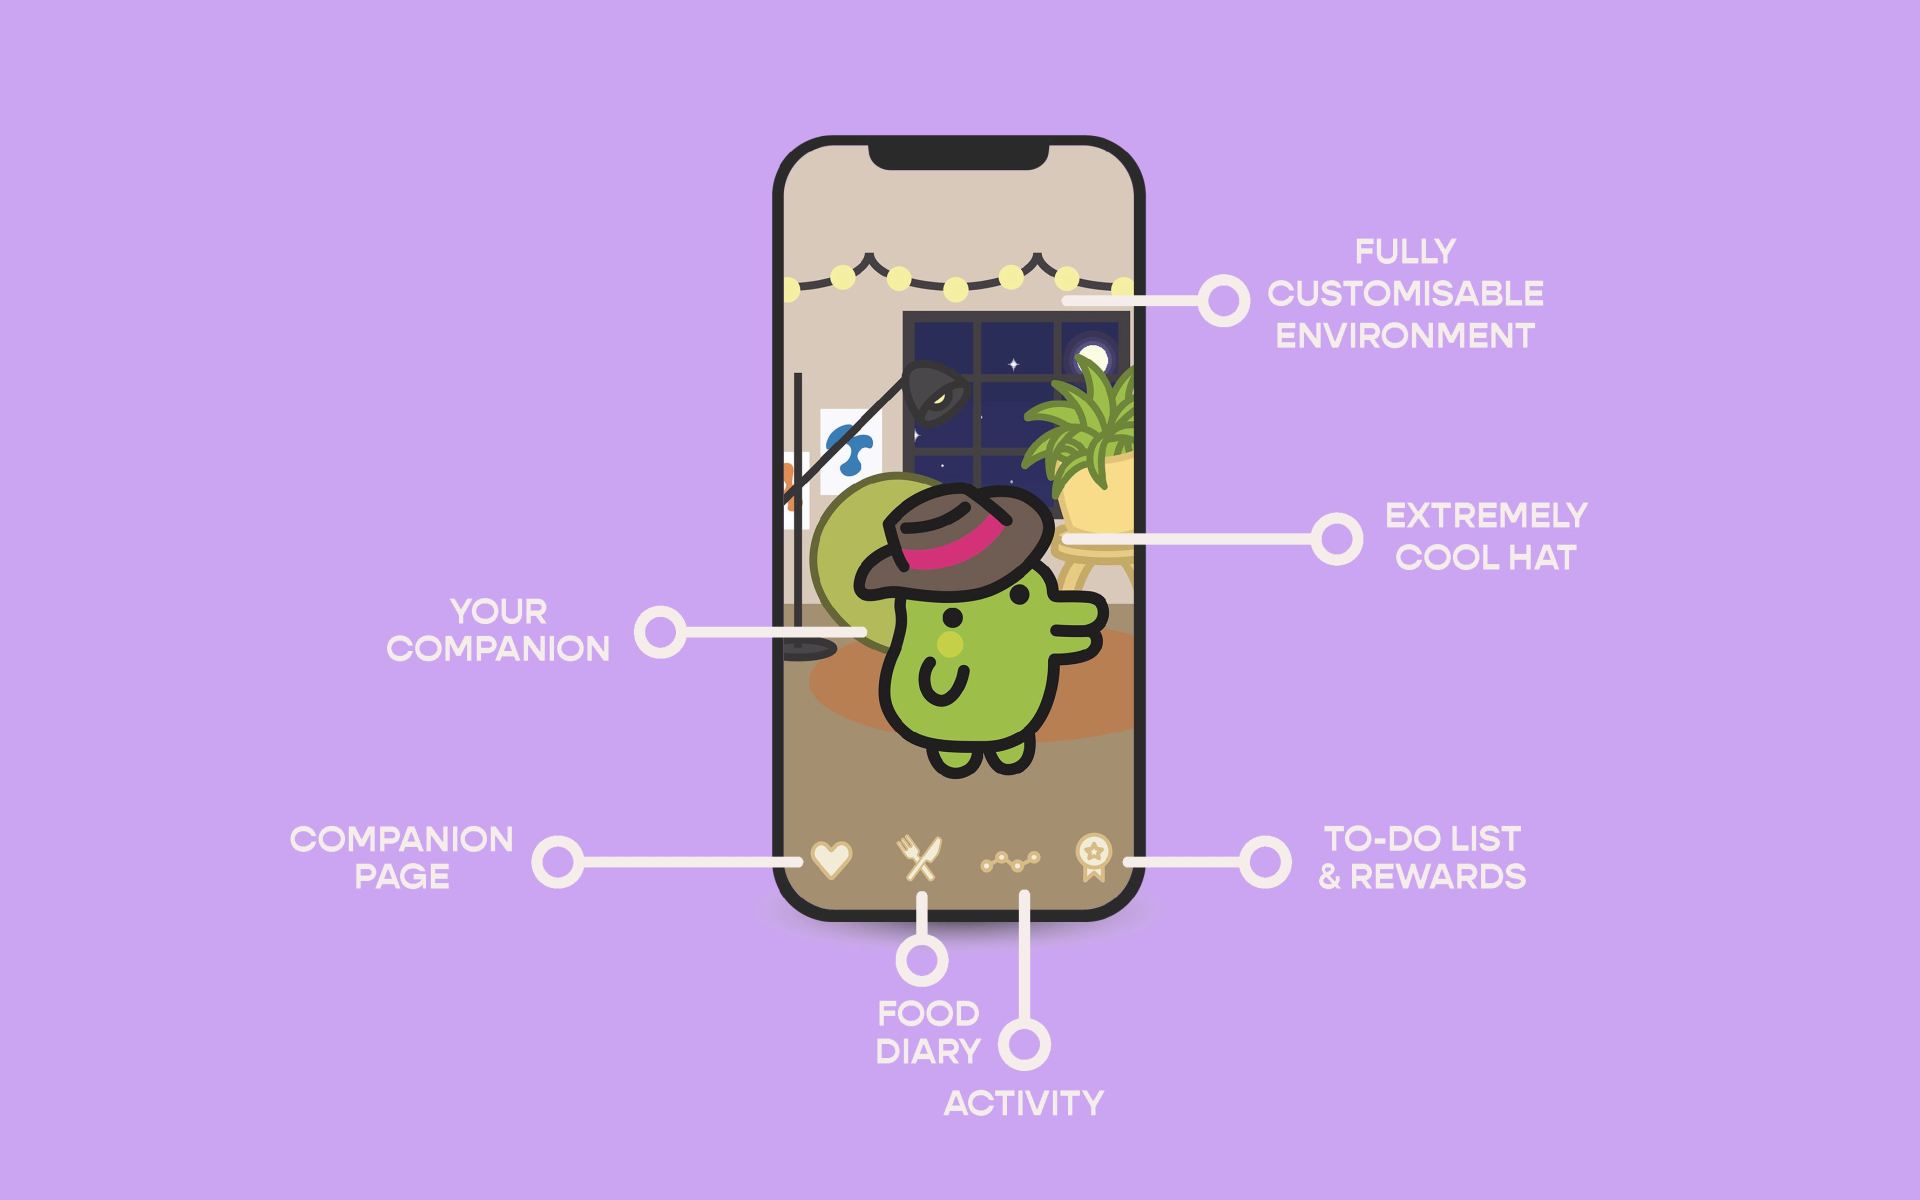 Anatomy of the companion Tamagotchi app.